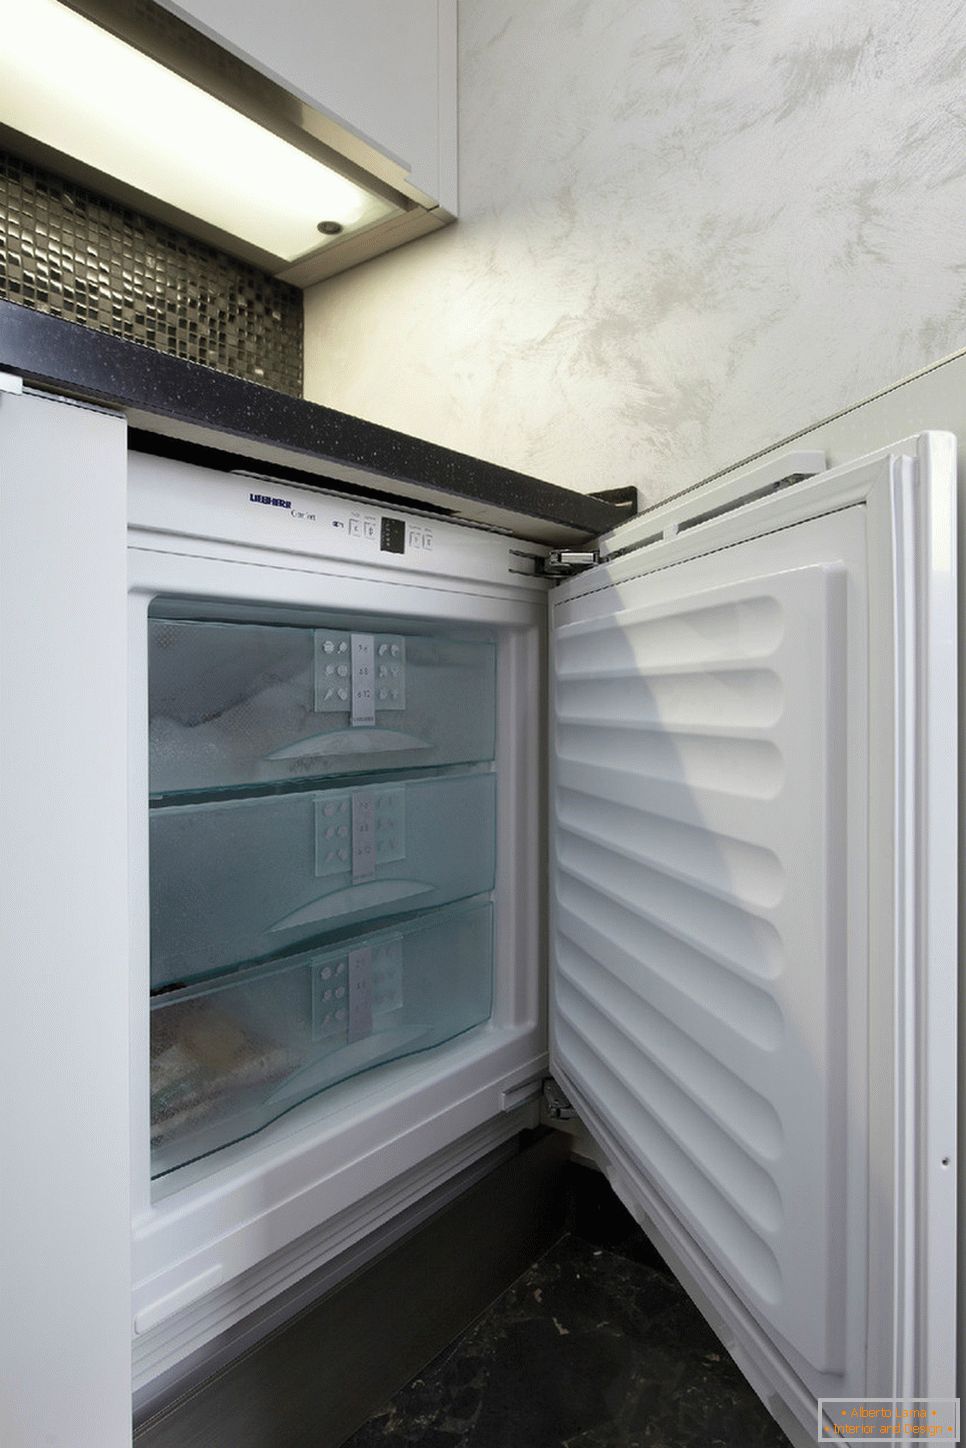 Modern refrigerator